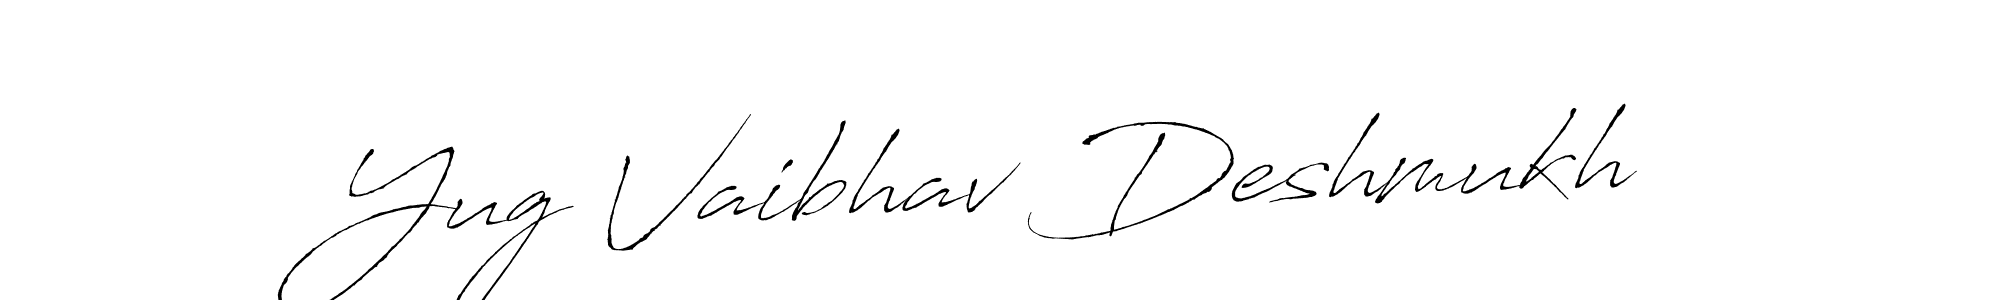 How to Draw Yug Vaibhav Deshmukh signature style? Antro_Vectra is a latest design signature styles for name Yug Vaibhav Deshmukh. Yug Vaibhav Deshmukh signature style 6 images and pictures png